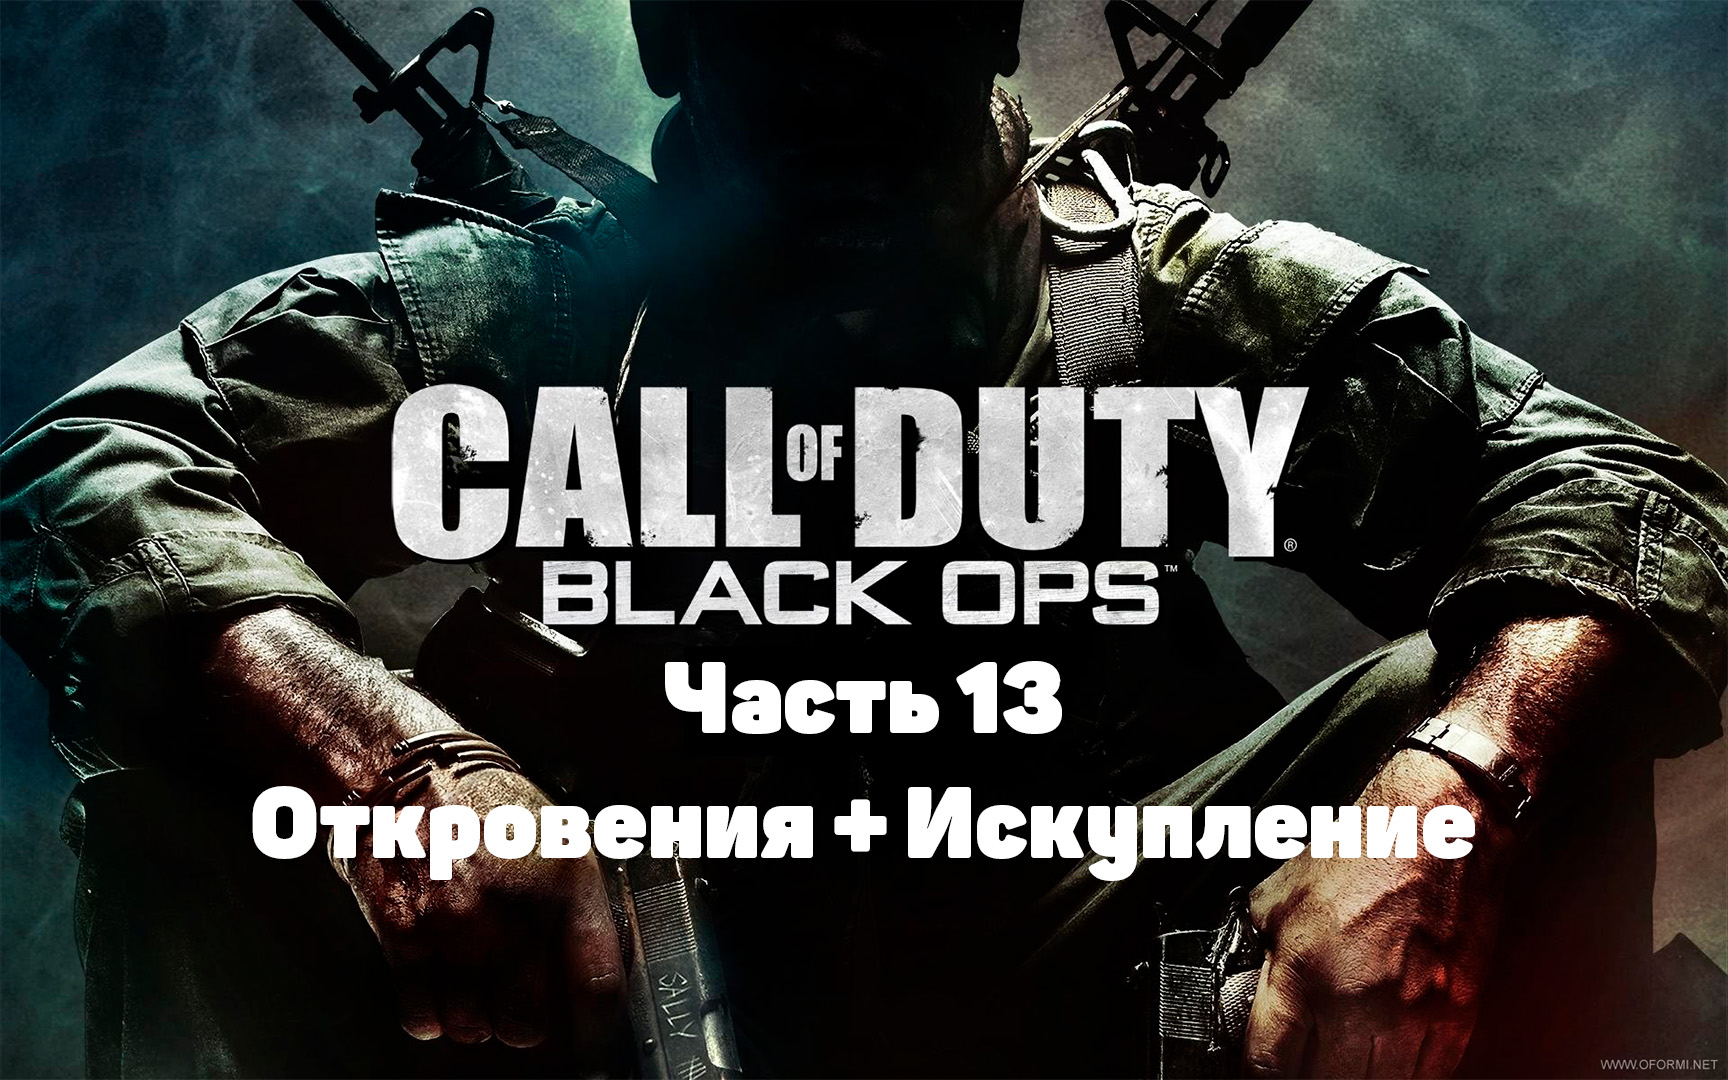 Call of Duty:Black Ops Часть 13 Откровения + Искупление(Прохождение)#callofduty#blackops#22#gametour